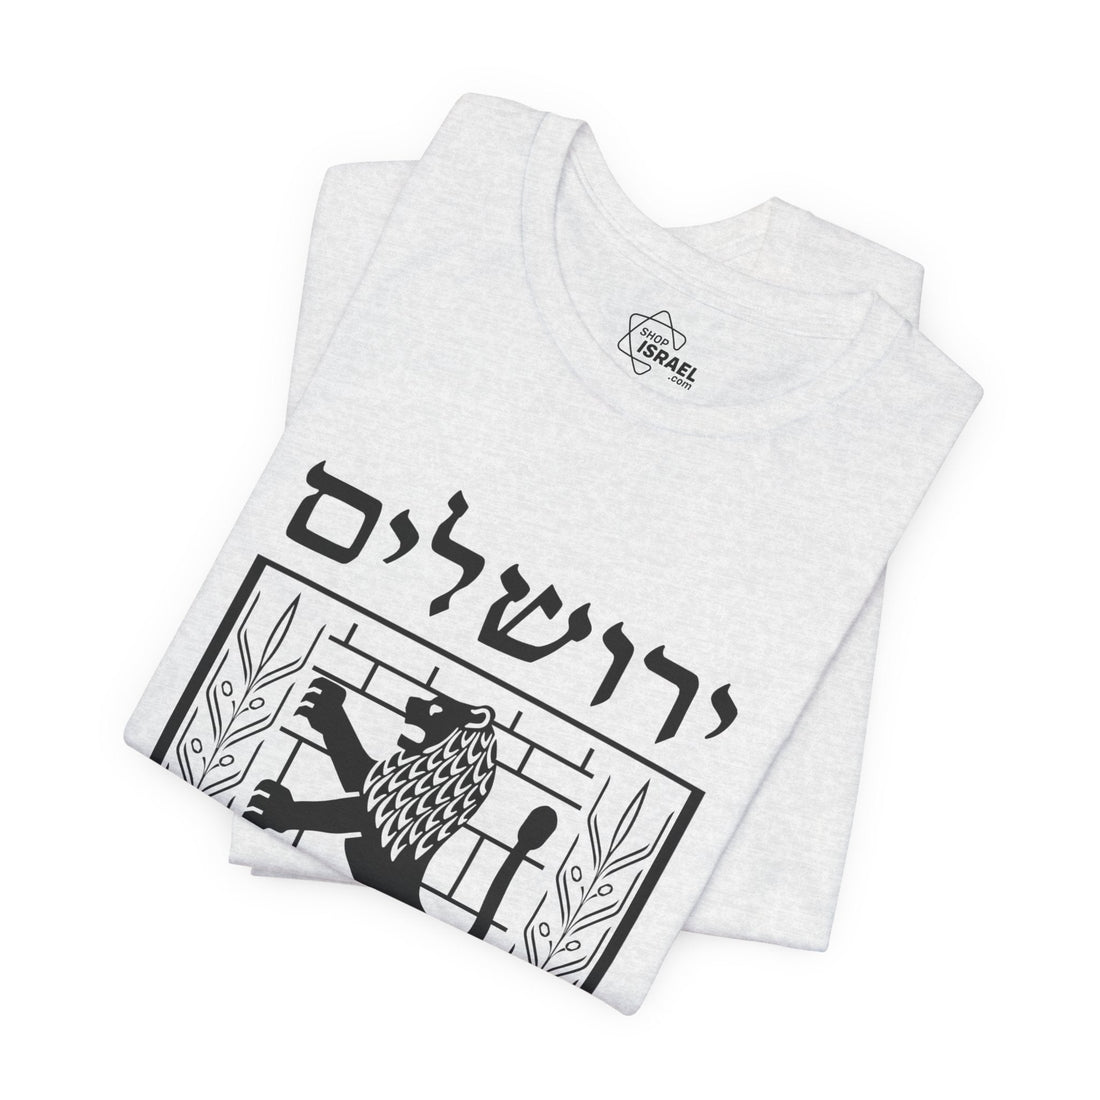 Jerusalem Emblem T-Shirt - Shop Israel